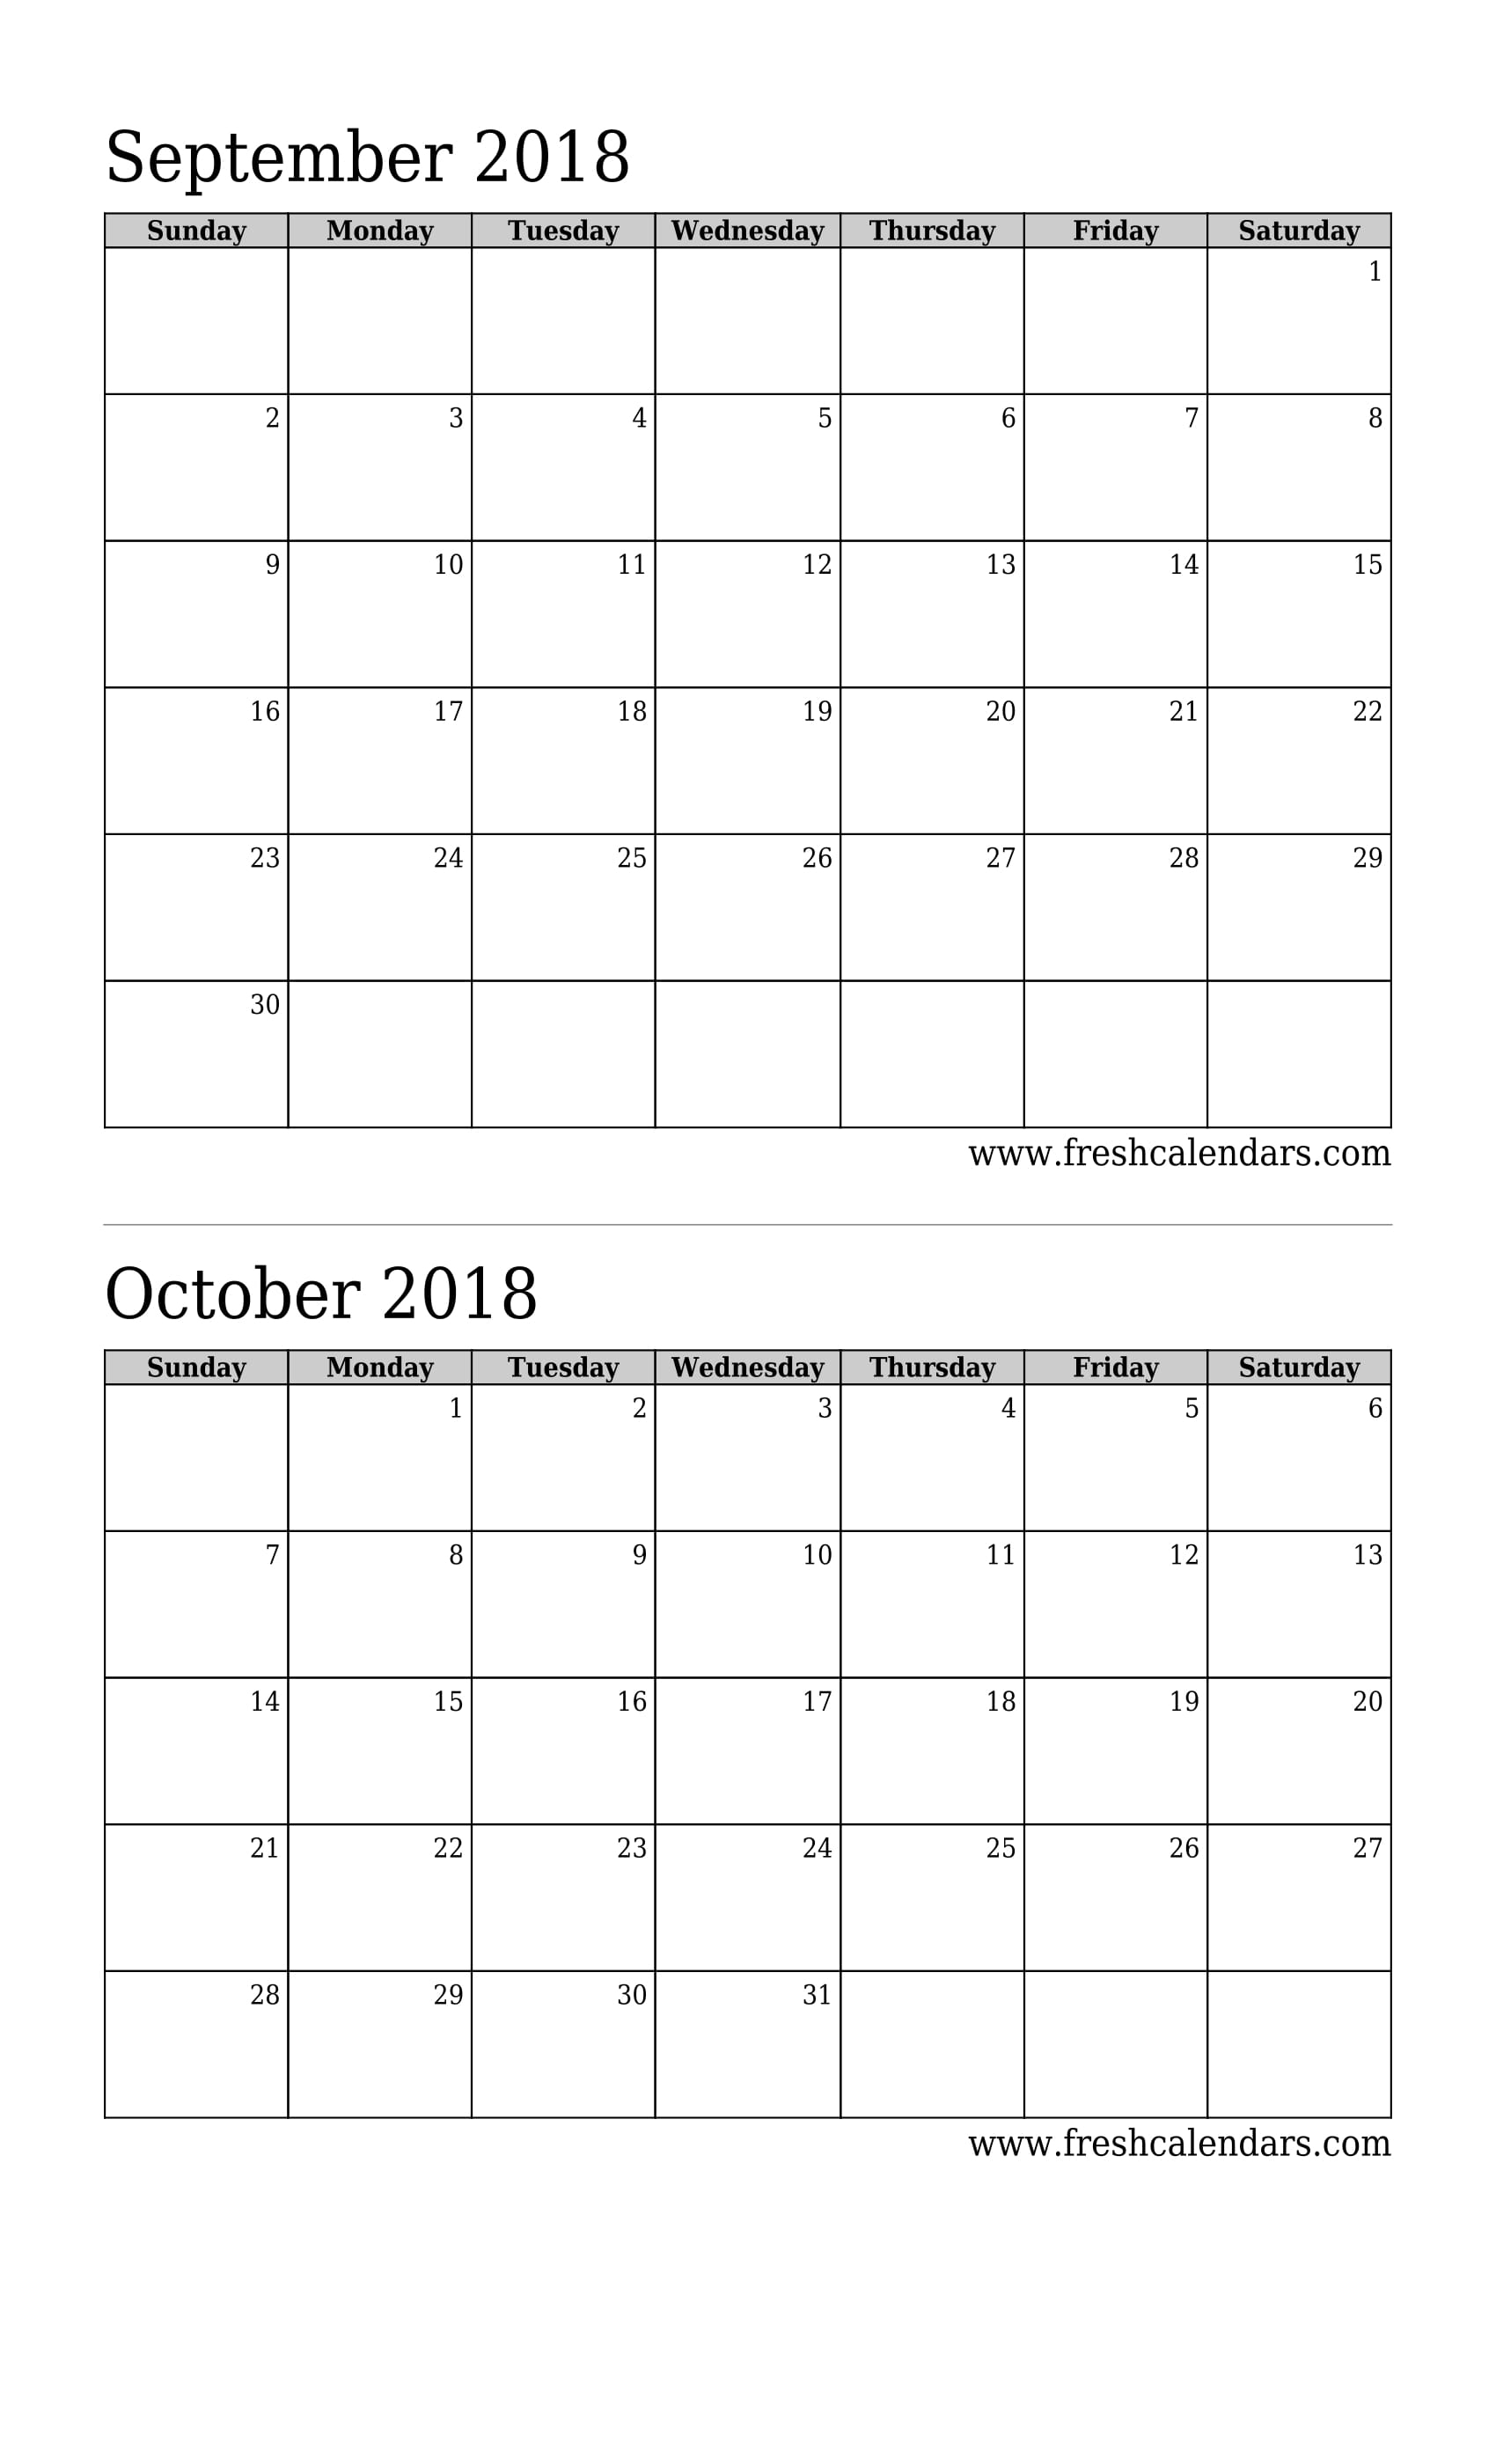 September 2018 Calendar Printable - Fresh Calendars throughout Calendar For Month Of September